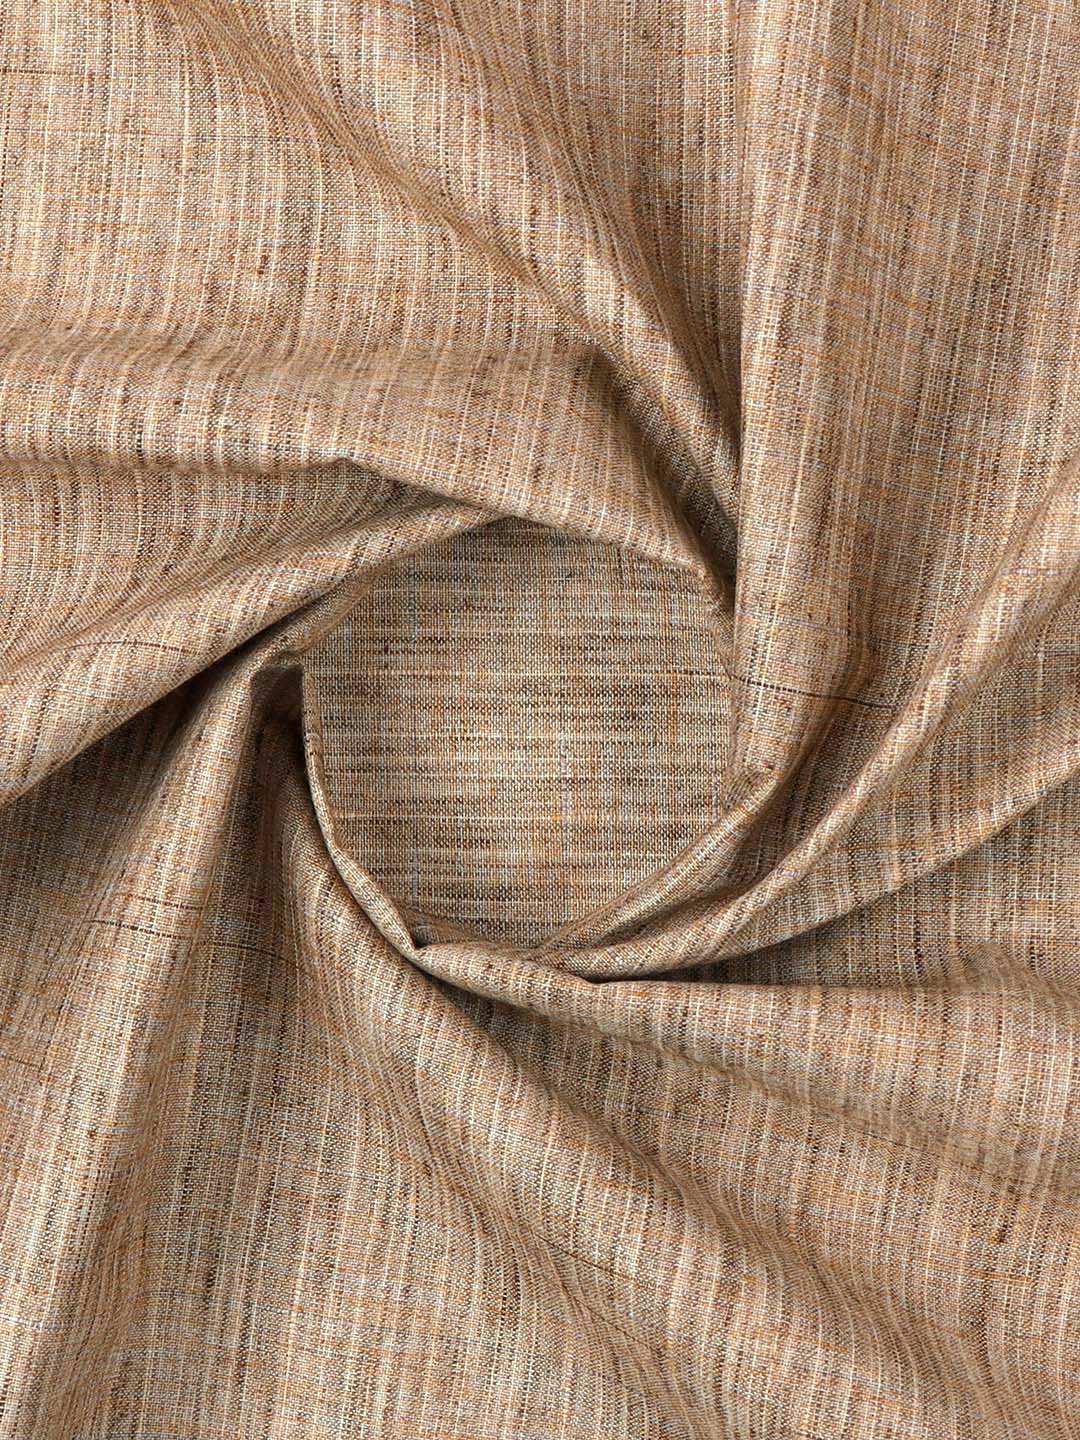 Cotton Rich Wood Brown Self Design Shirt Fabric - Galaxy Art